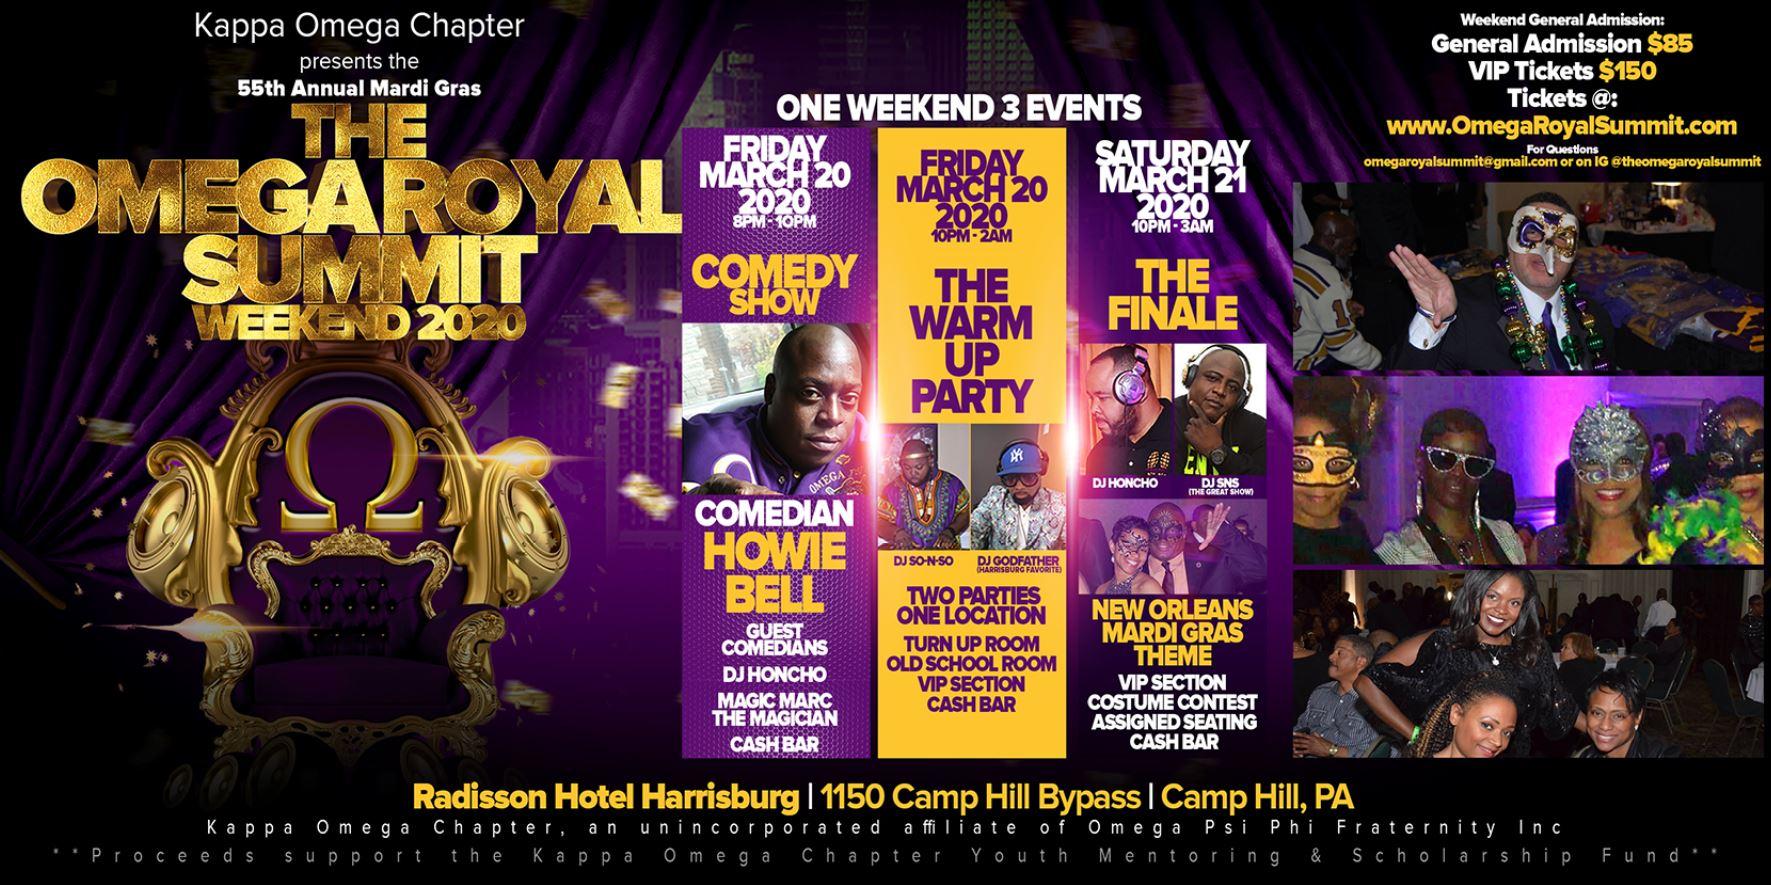 Omega Royal Summit Weekend 2020 (Kappa Omega Chapter Mardi Gras)